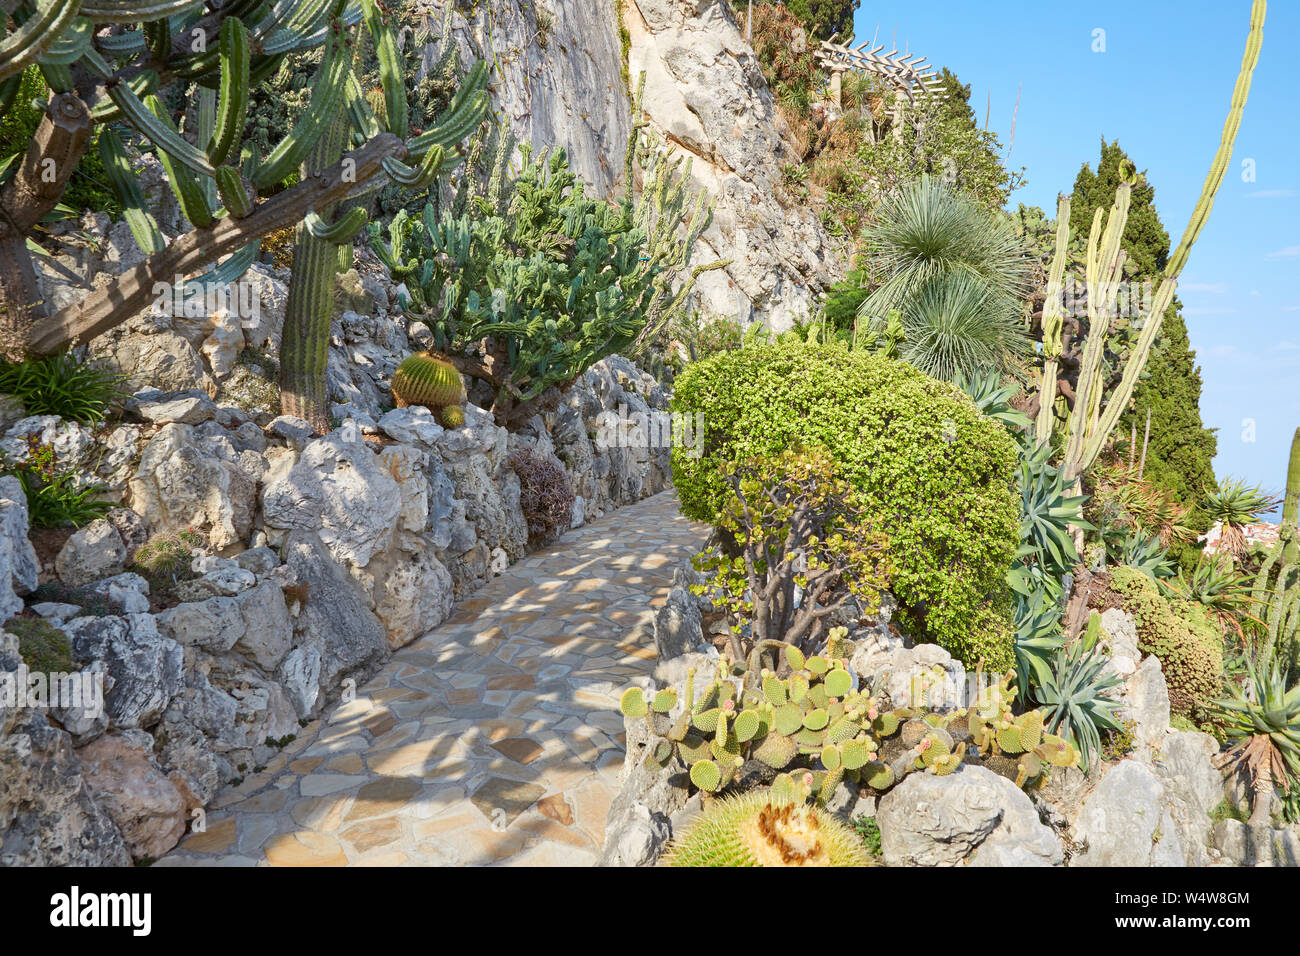 MONTE CARLO, MONACO - AUGUST 20, 2016: The exotic garden path and cliff with rare succulent plants in a sunny summer day in Monte Carlo, Monaco. Stock Photo